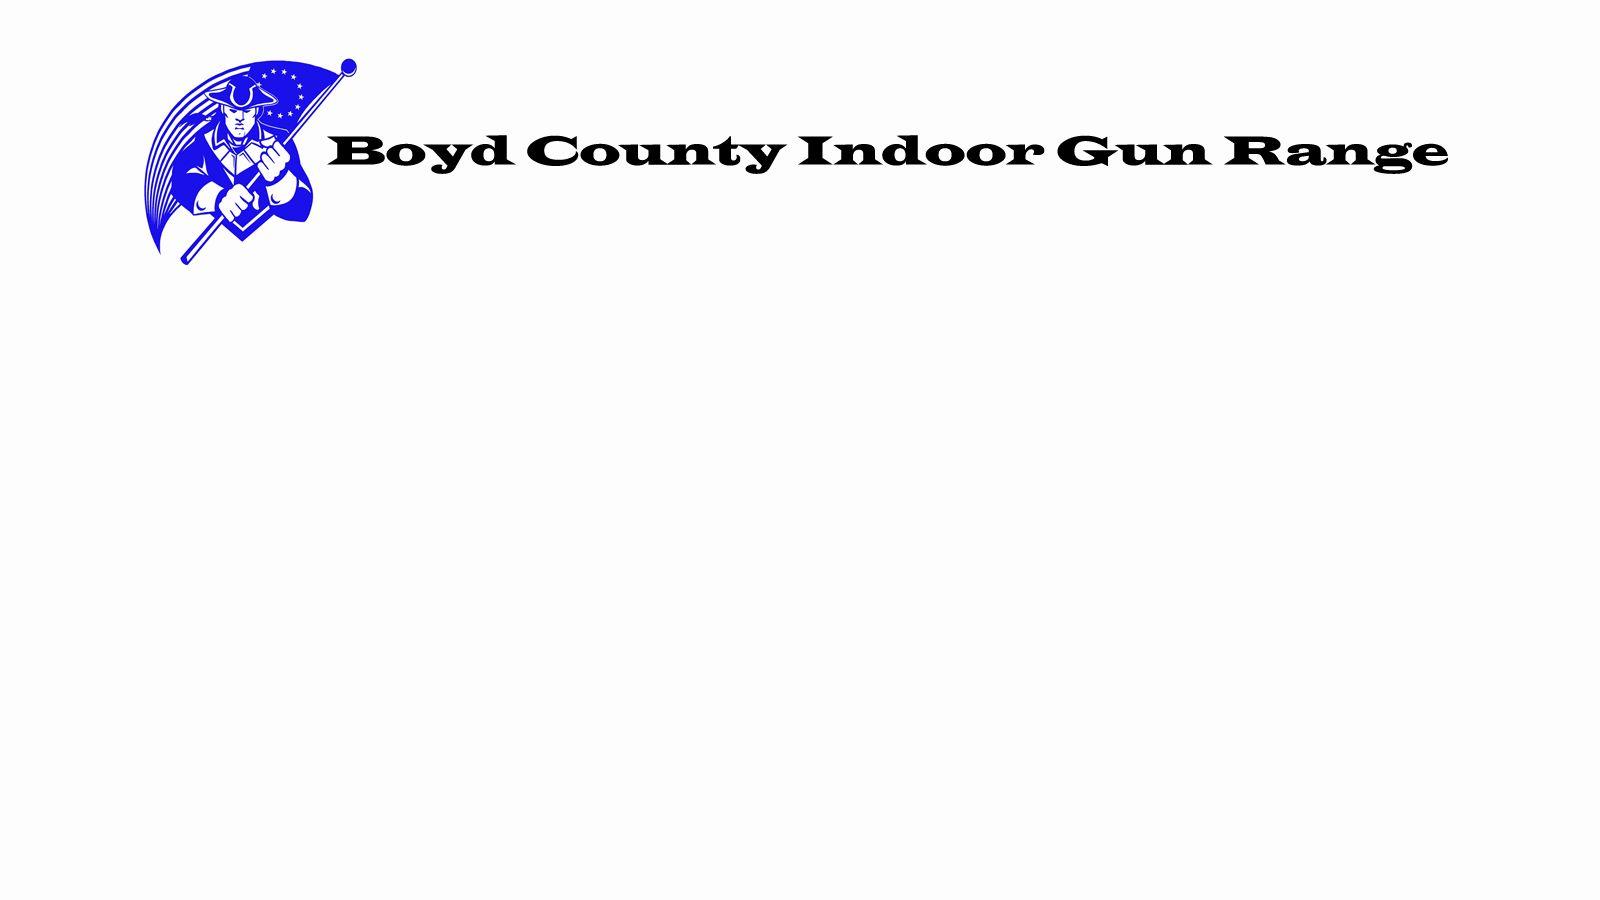 CCDW Logo - CCDW Class - Boyd County Indoor Gun Range